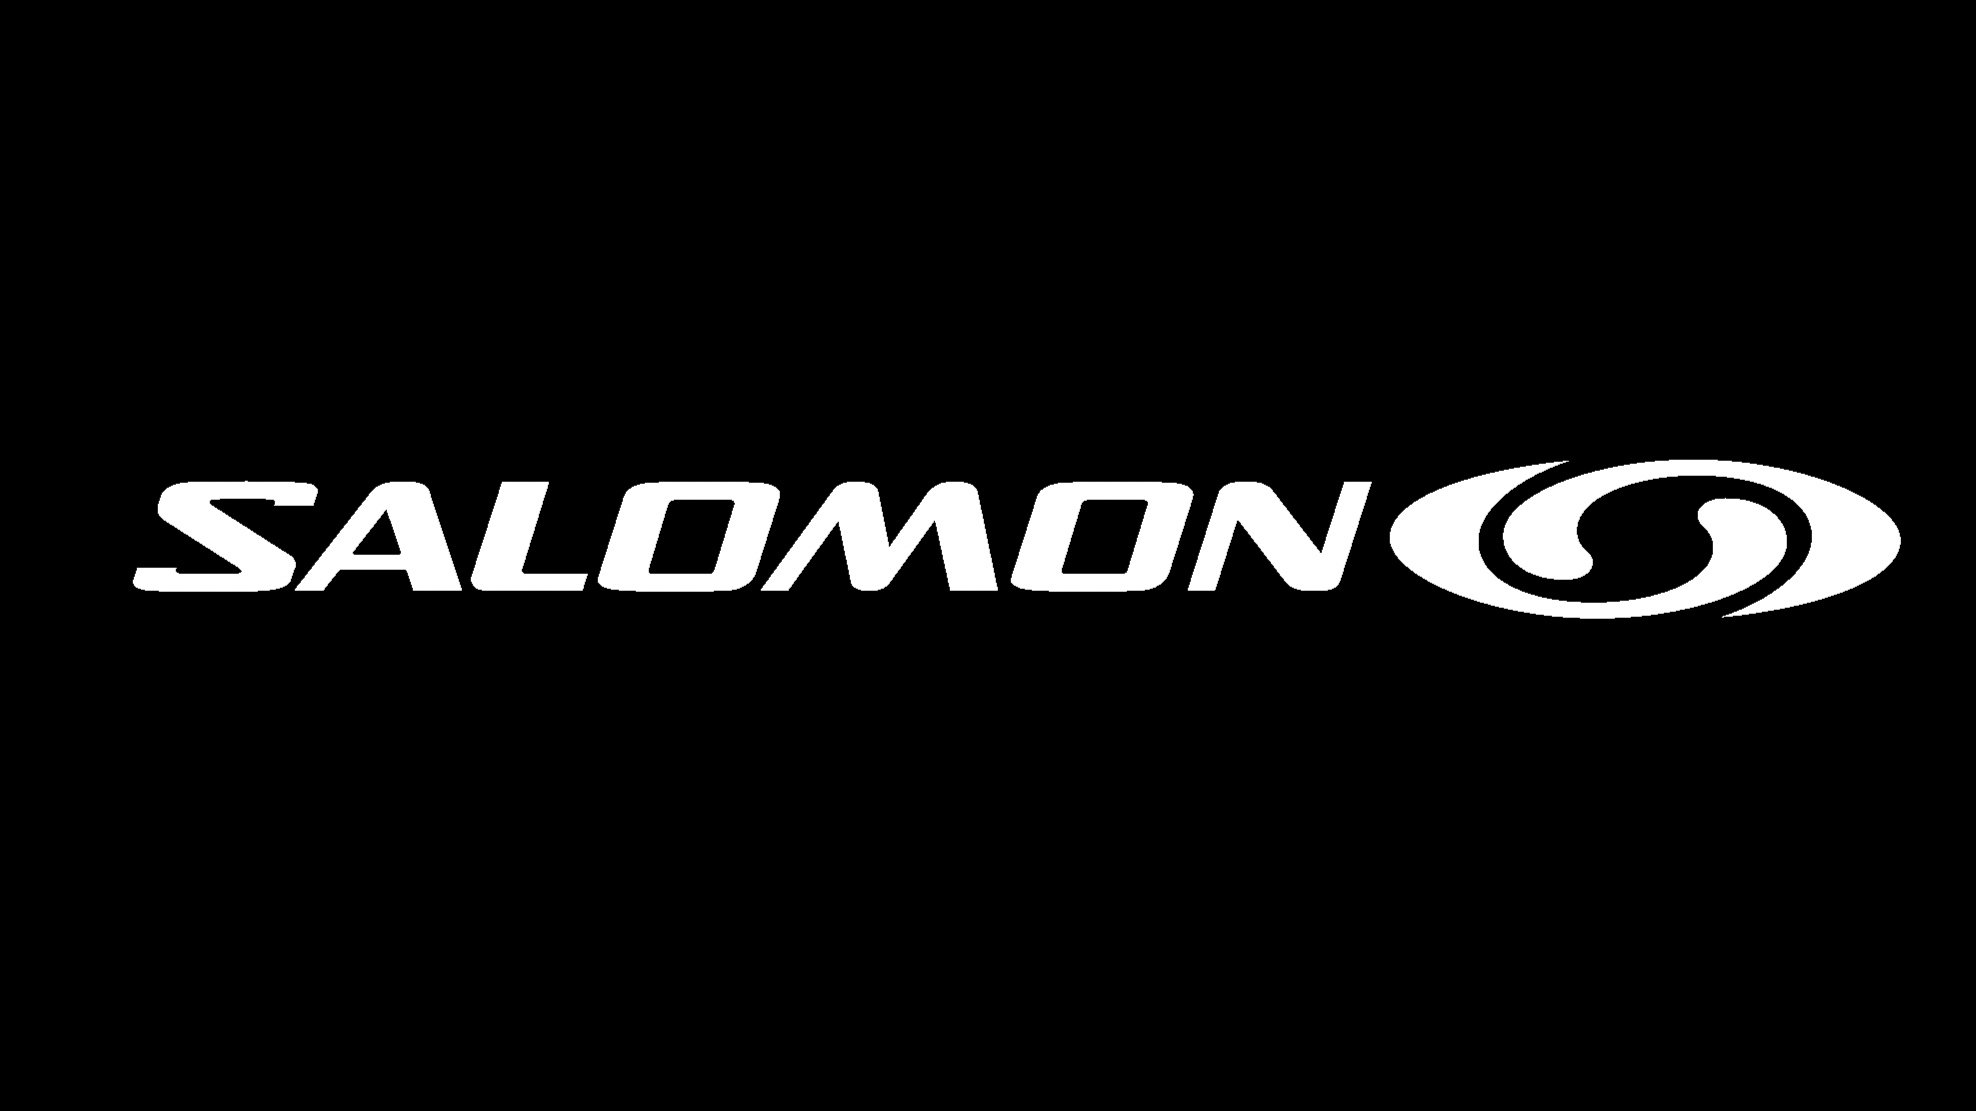 salomon-3-logo-black-and-white.jpg